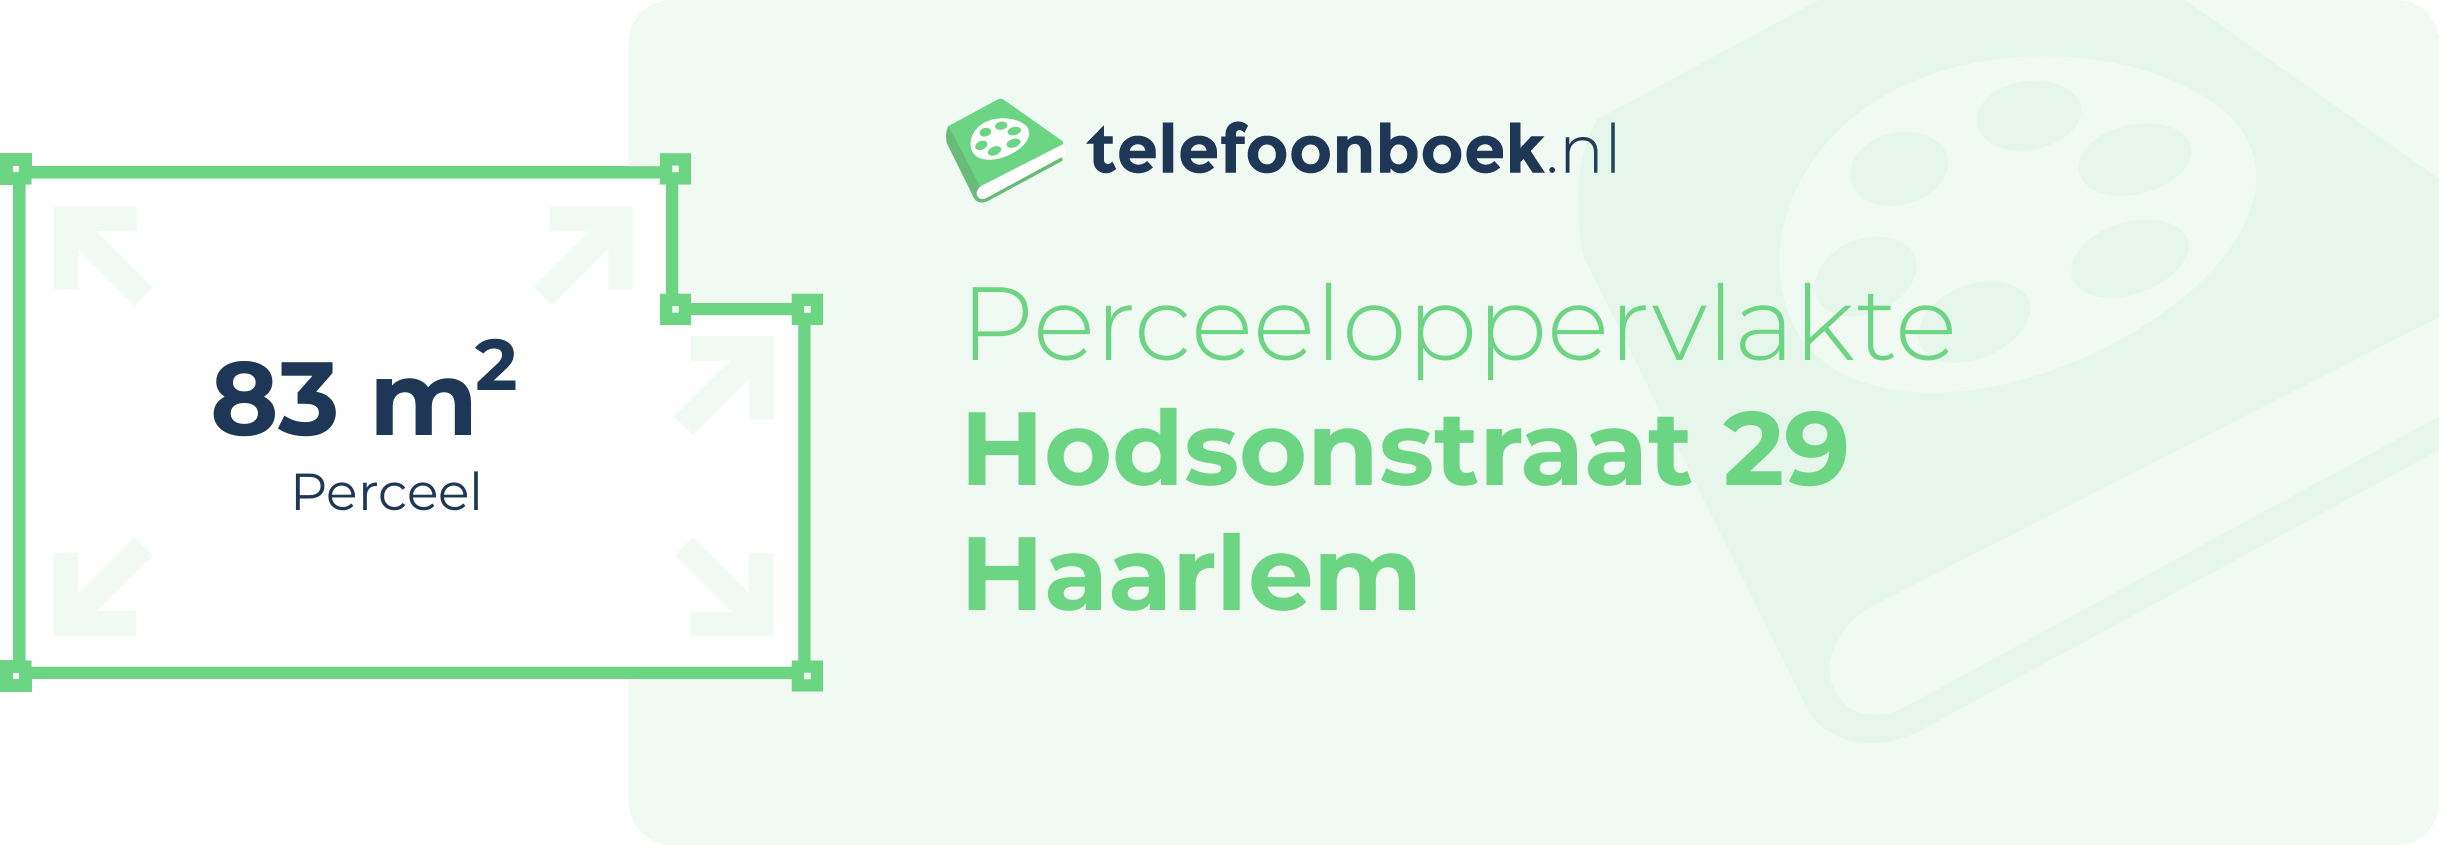 Perceeloppervlakte Hodsonstraat 29 Haarlem